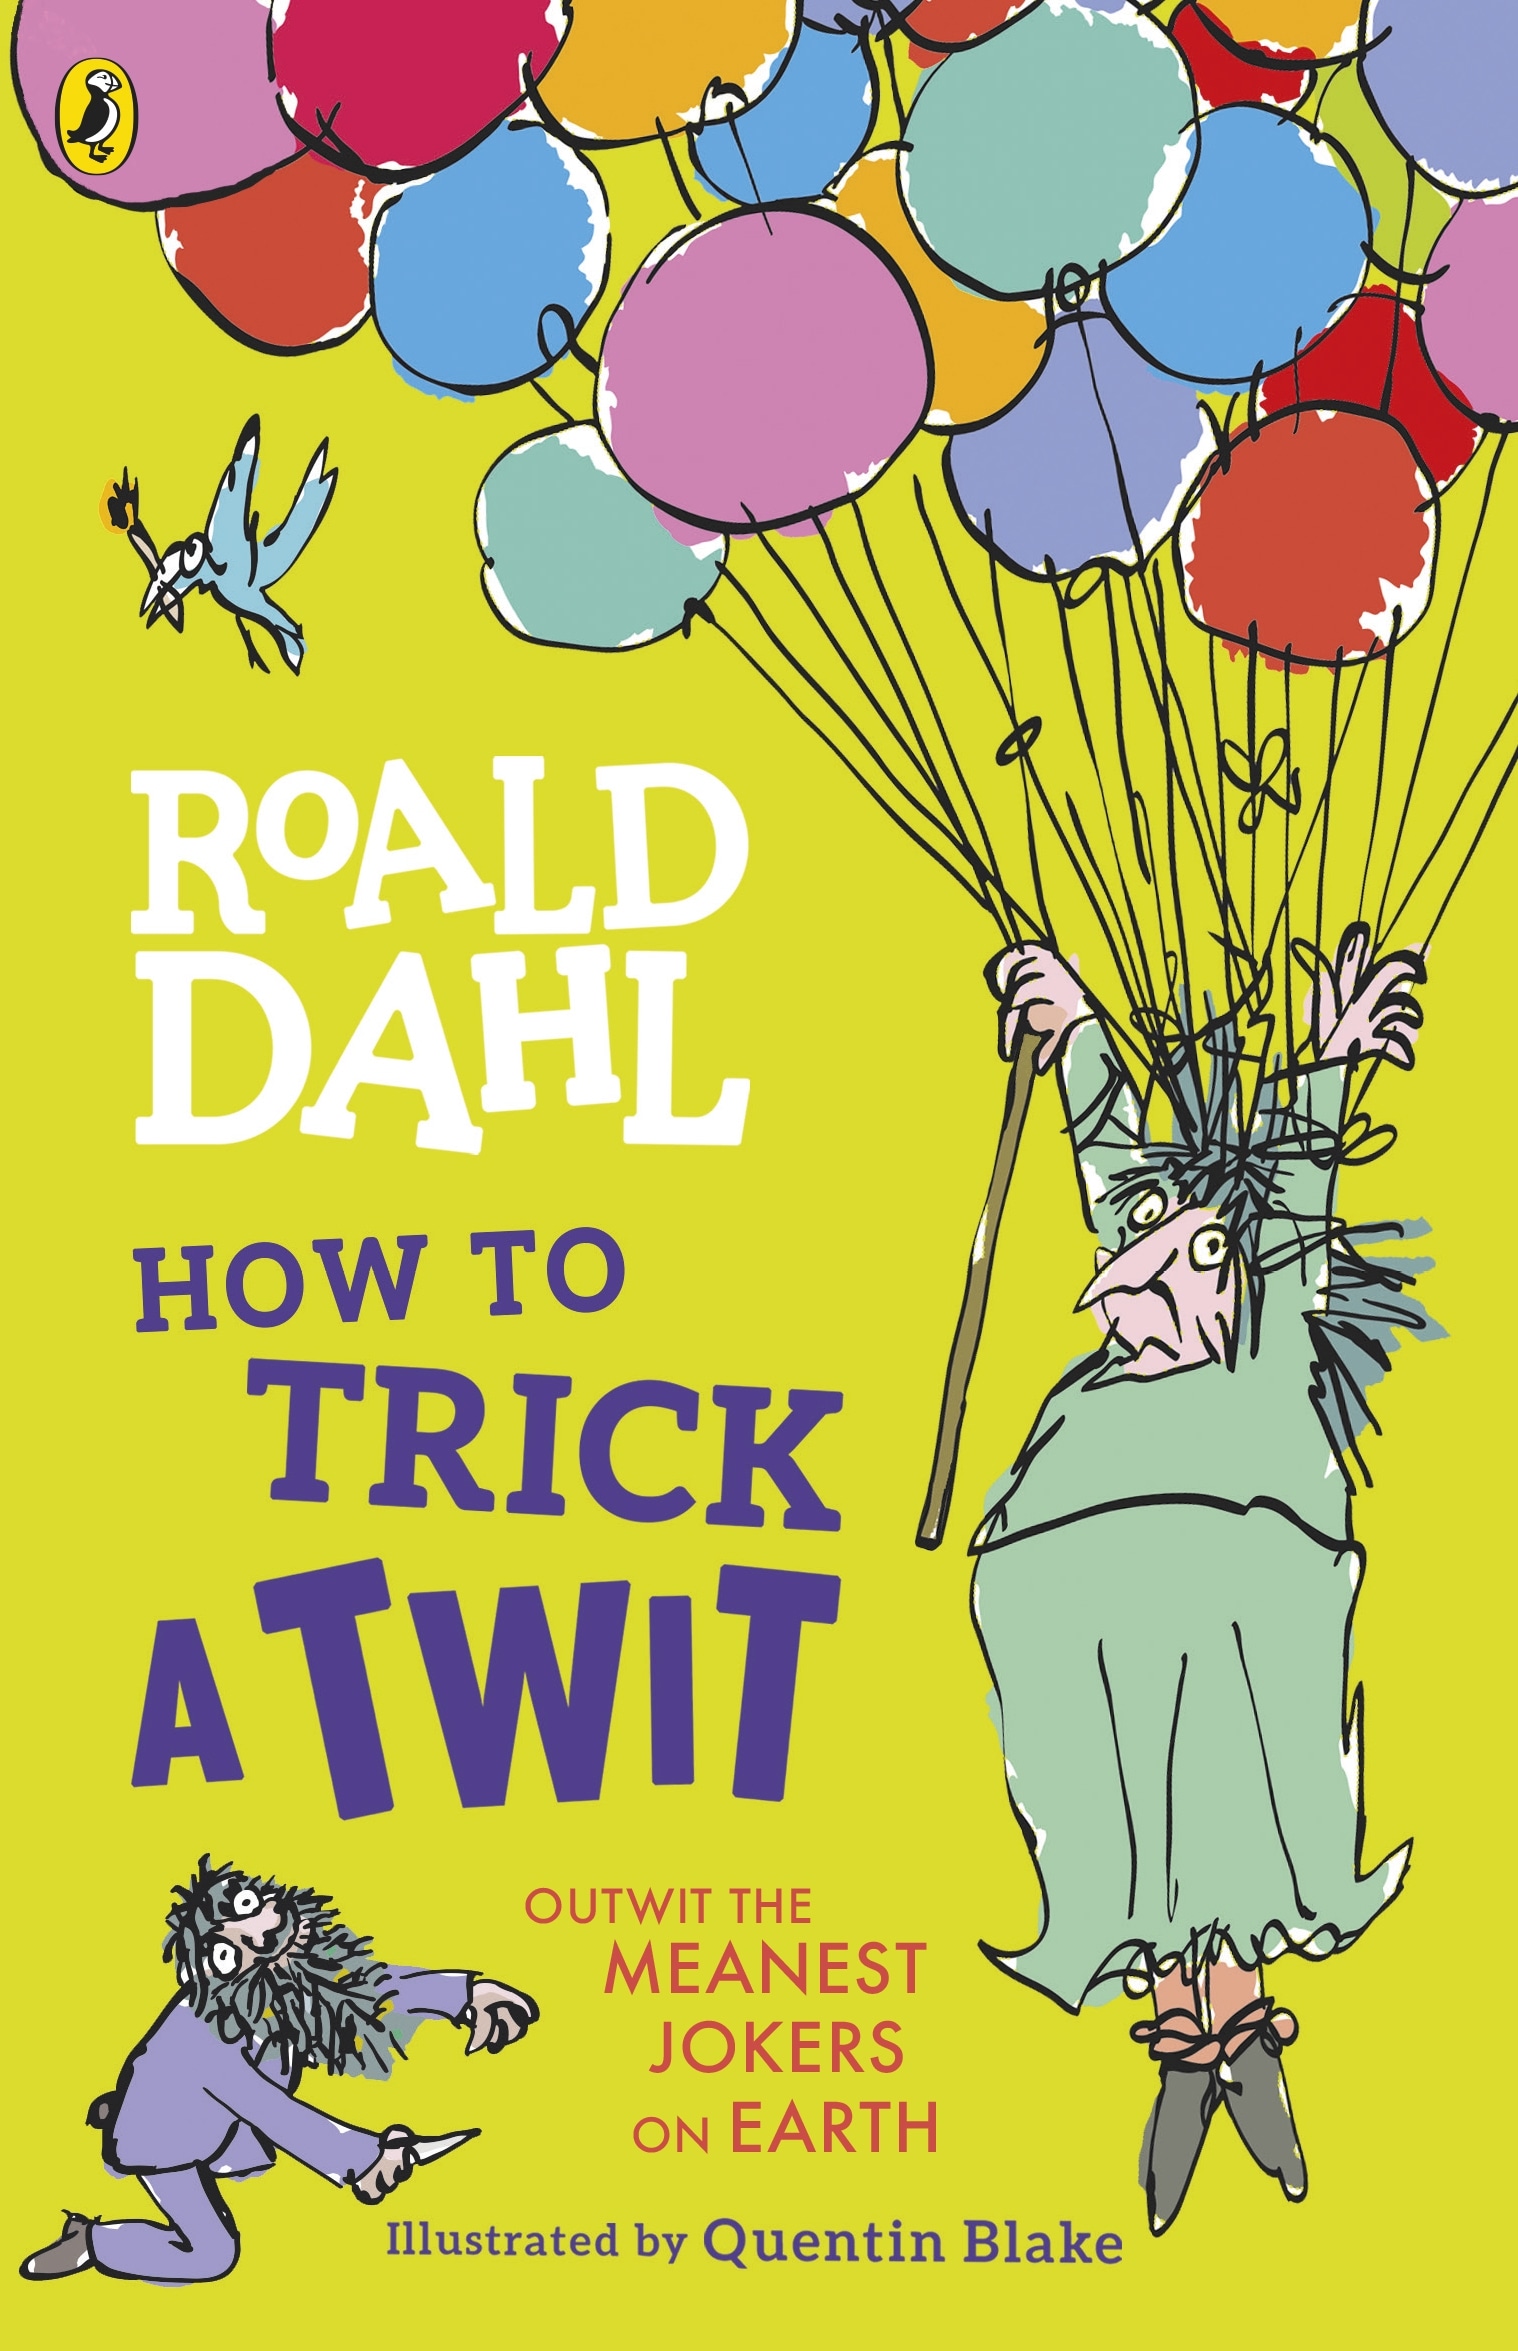 Book “How to Trick a Twit” by Roald Dahl — April 1, 2021